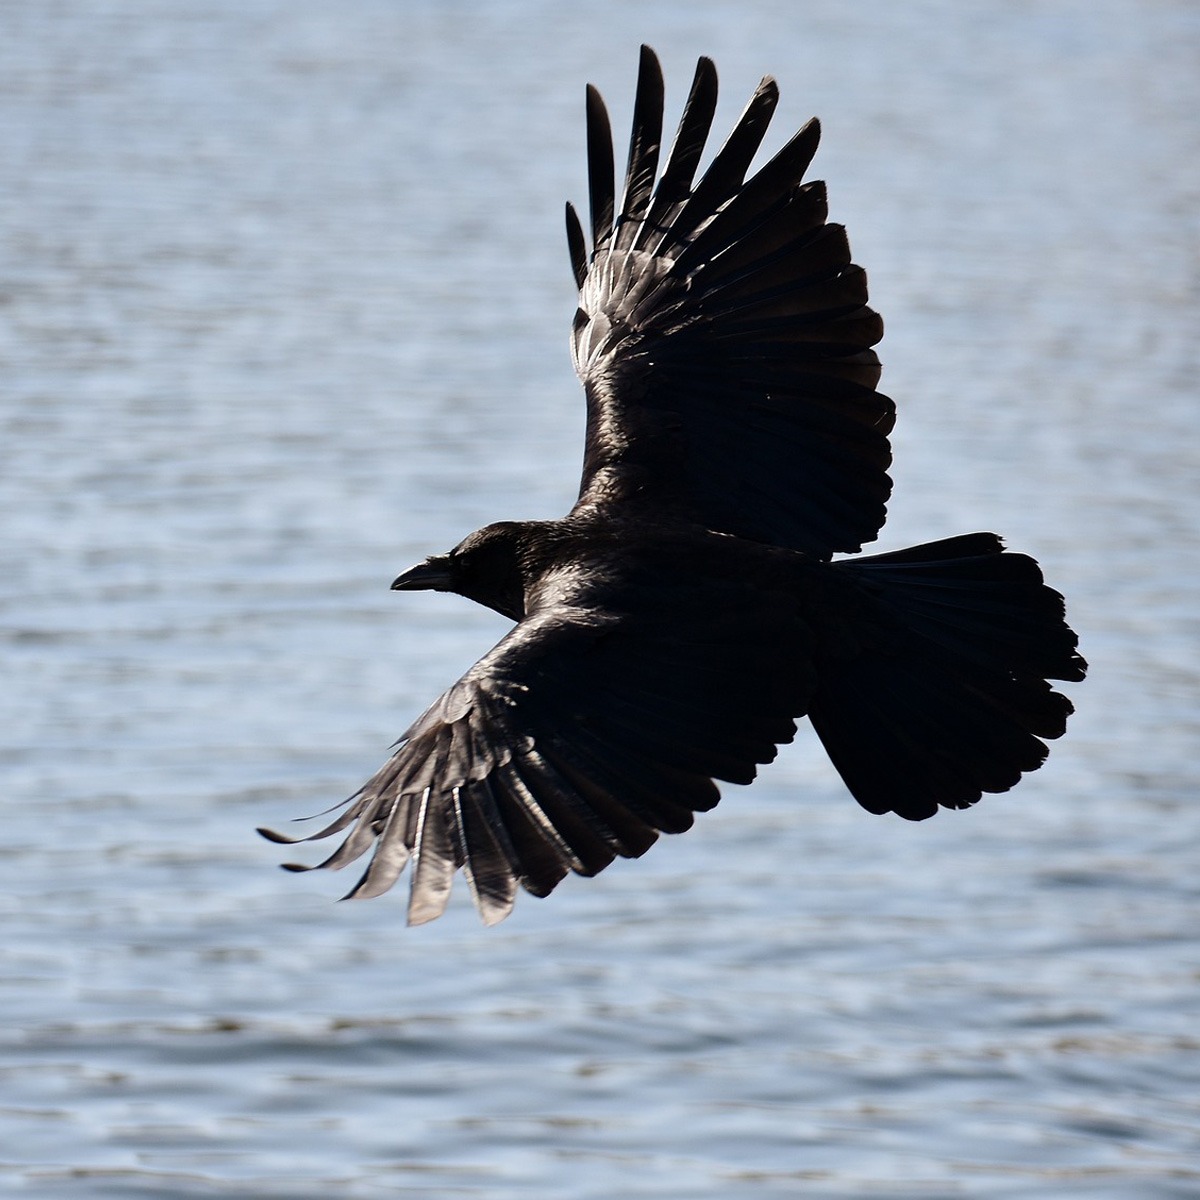 Großer schwarzer Vogel: Rabe oder Krähe?